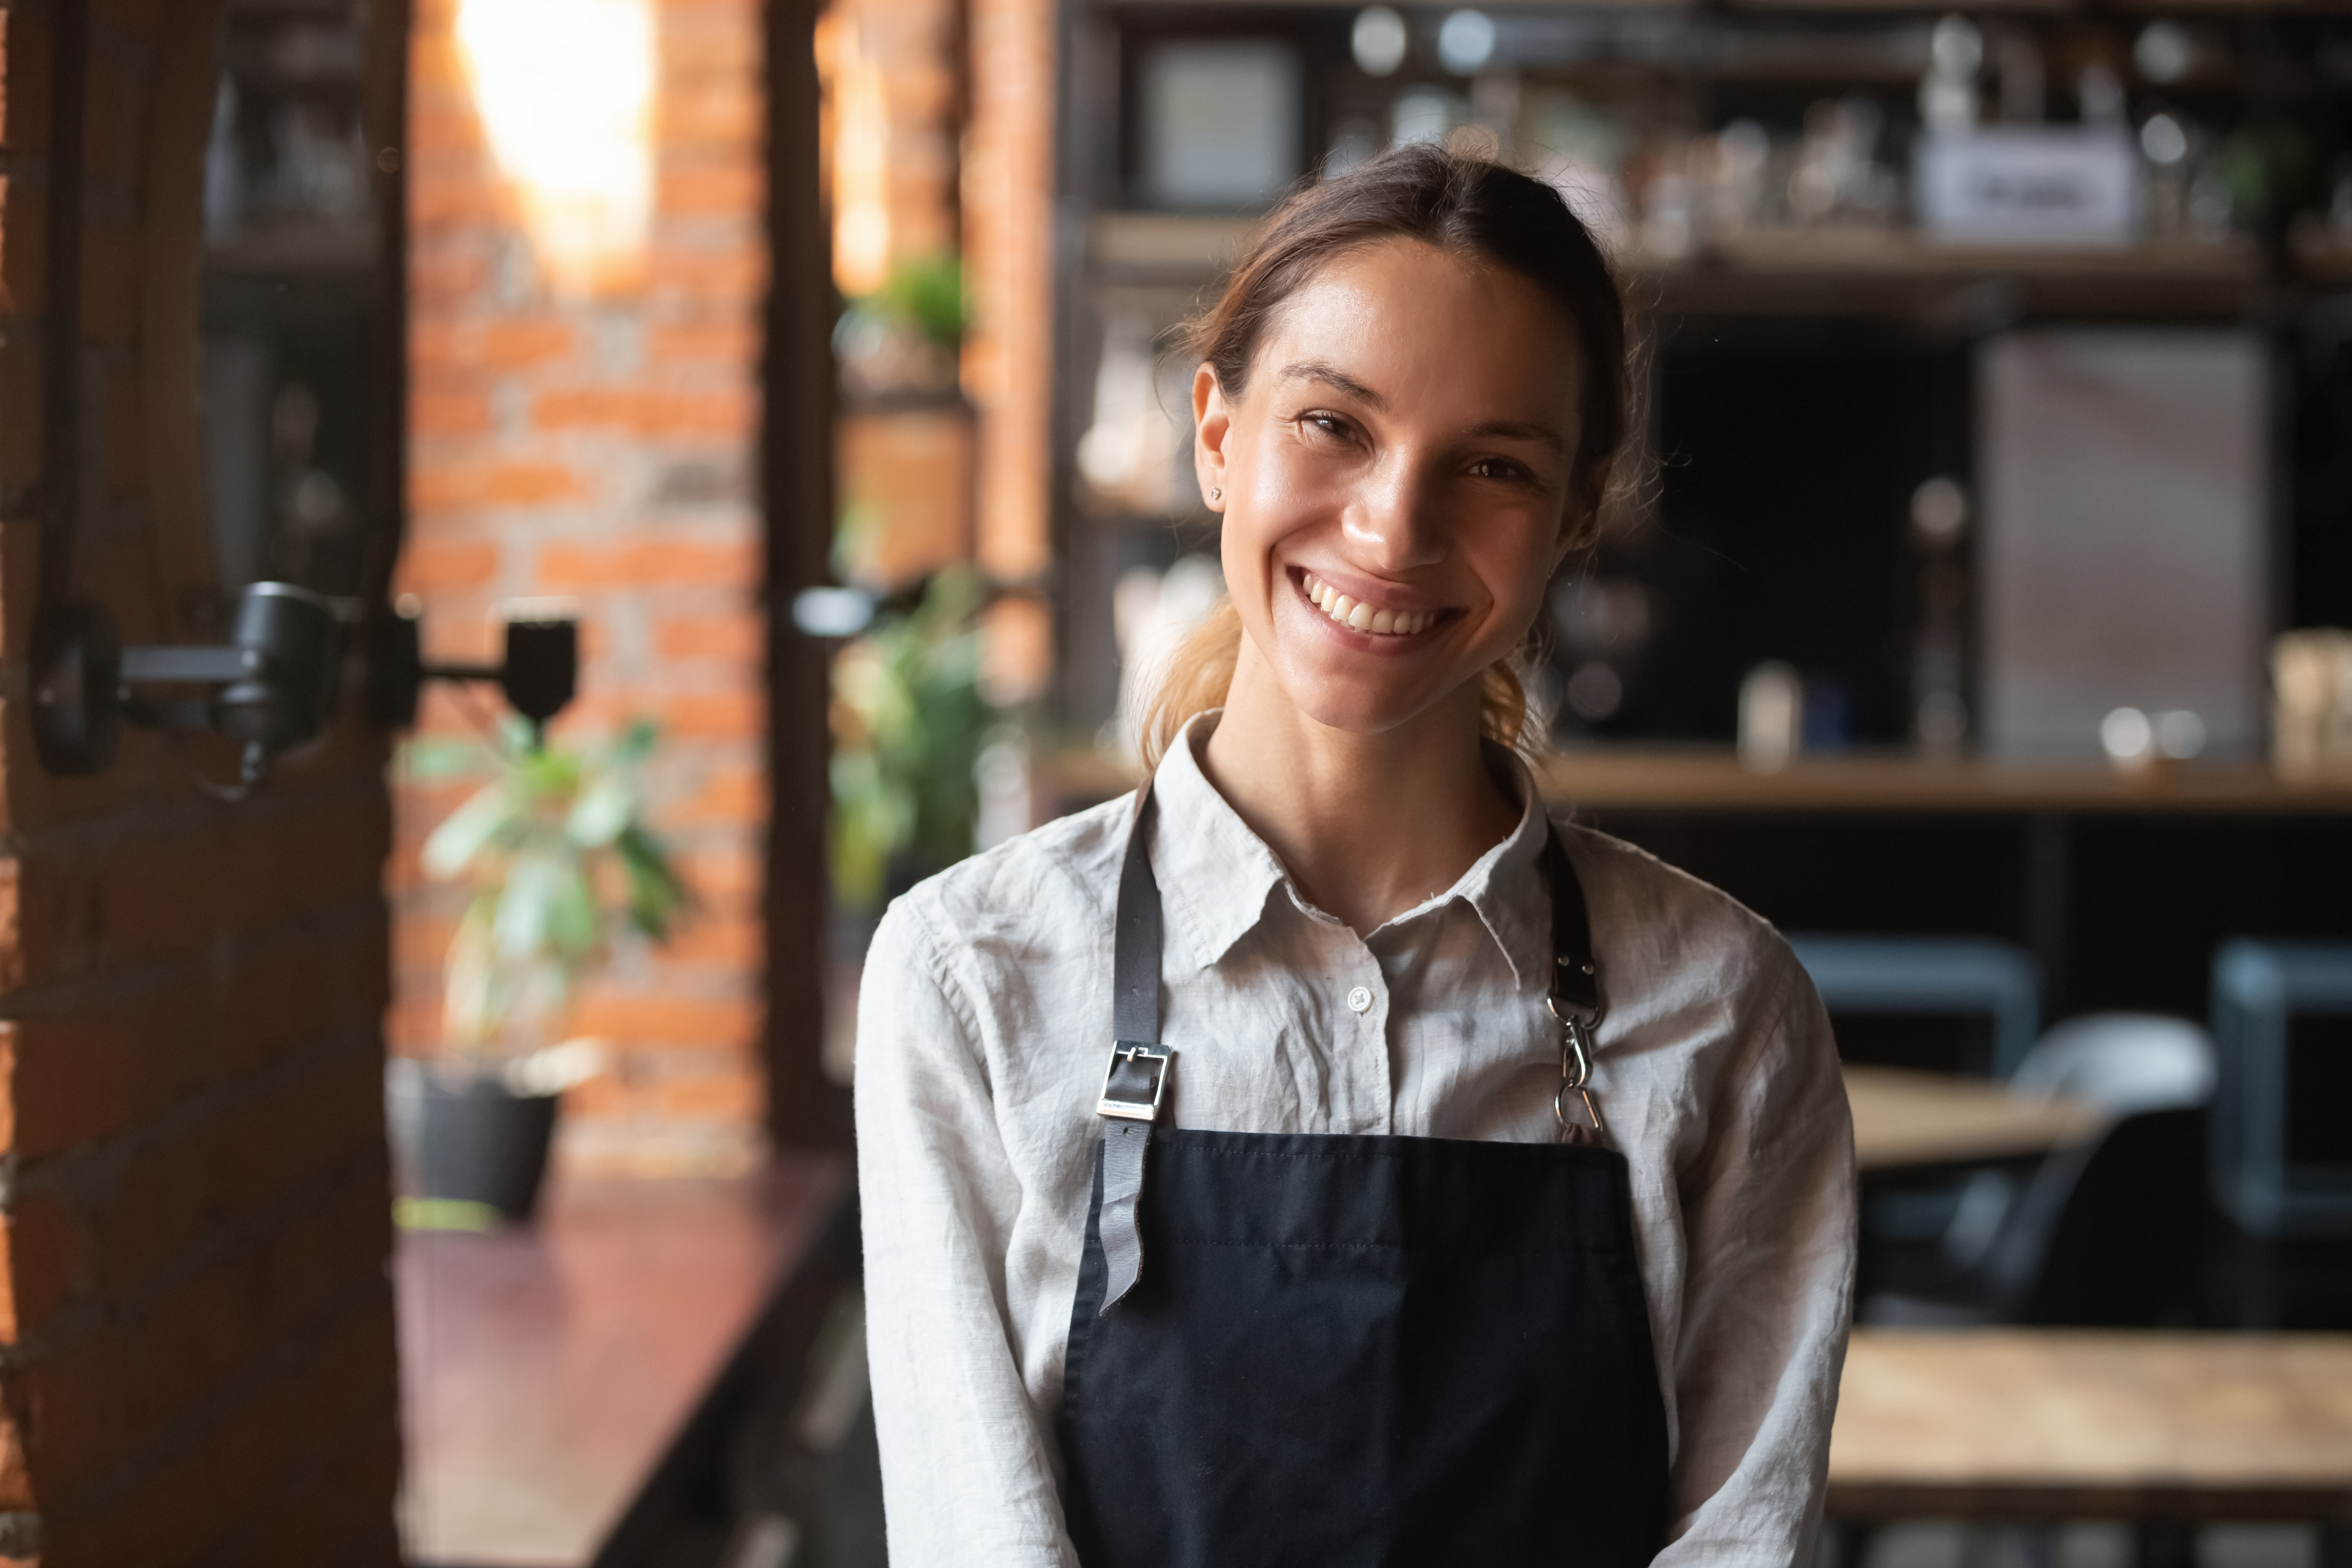 A young waitress | Source: Shutterstock